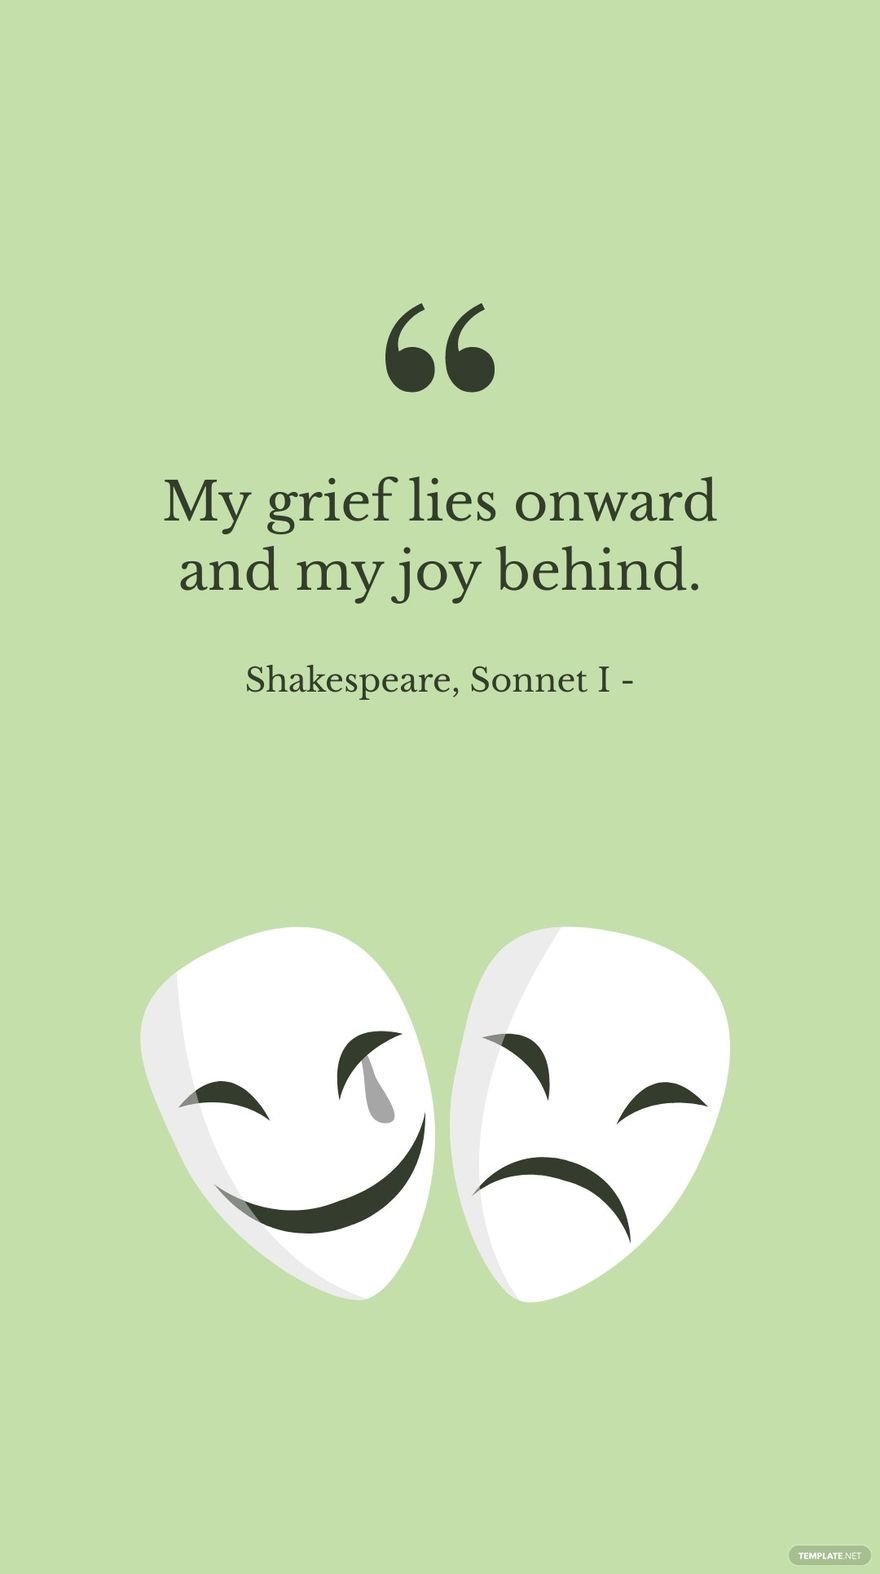 Free Shakespeare, Sonnet I - My grief lies onward and my joy behind. in JPG